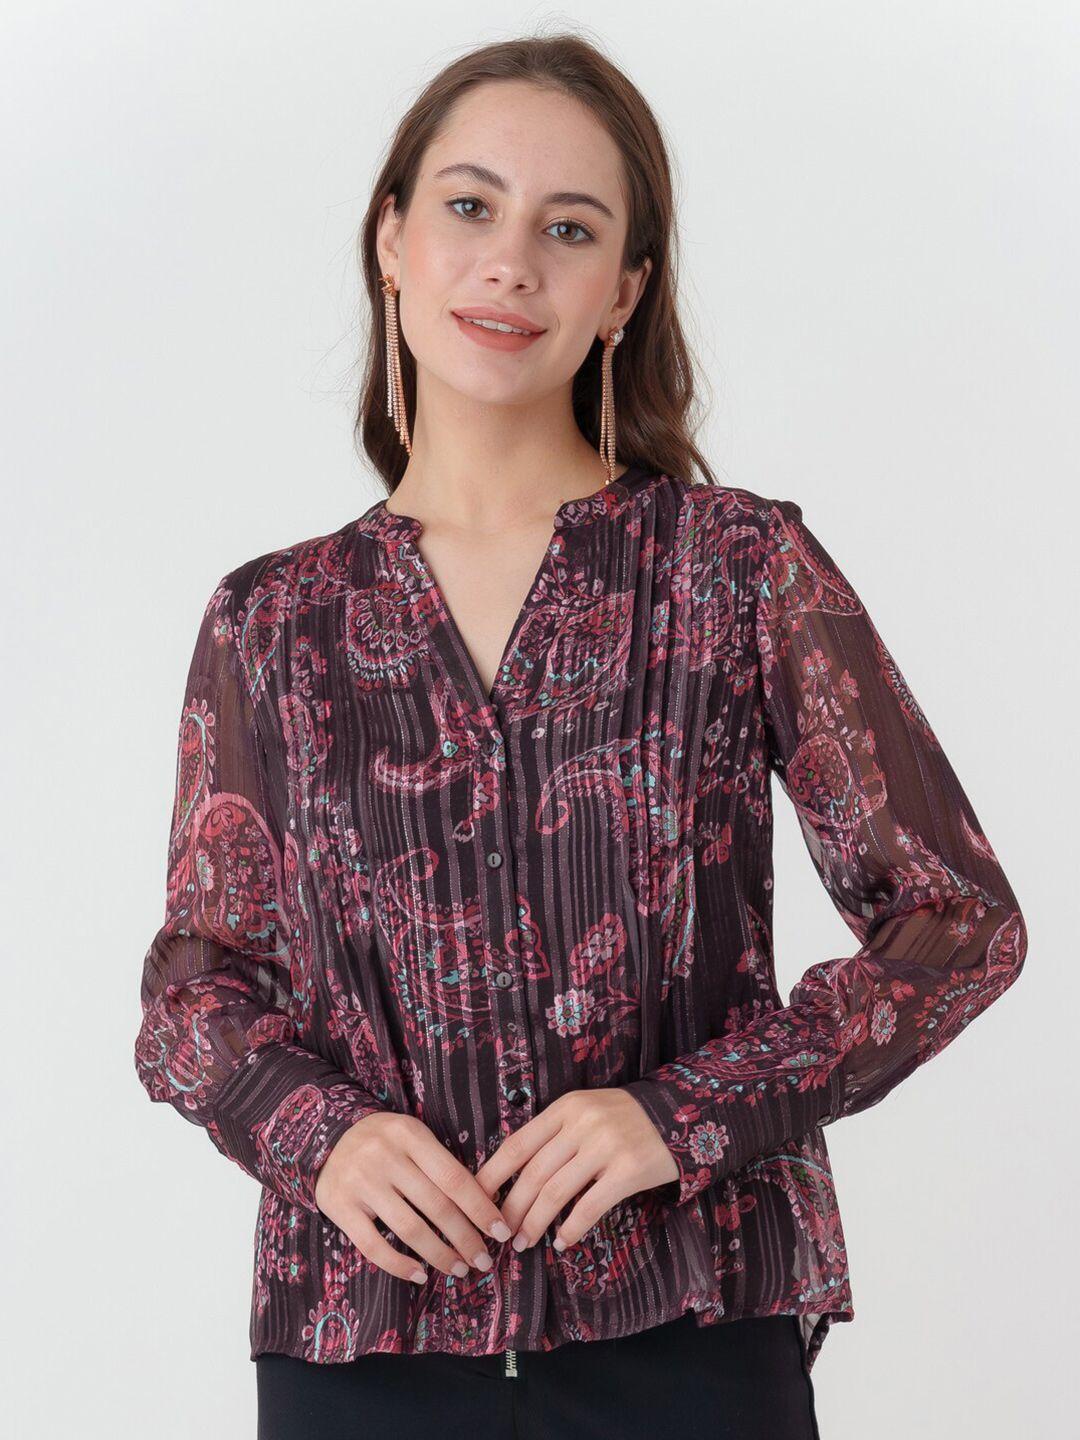 zink london ethnic motifs printed shirt style top